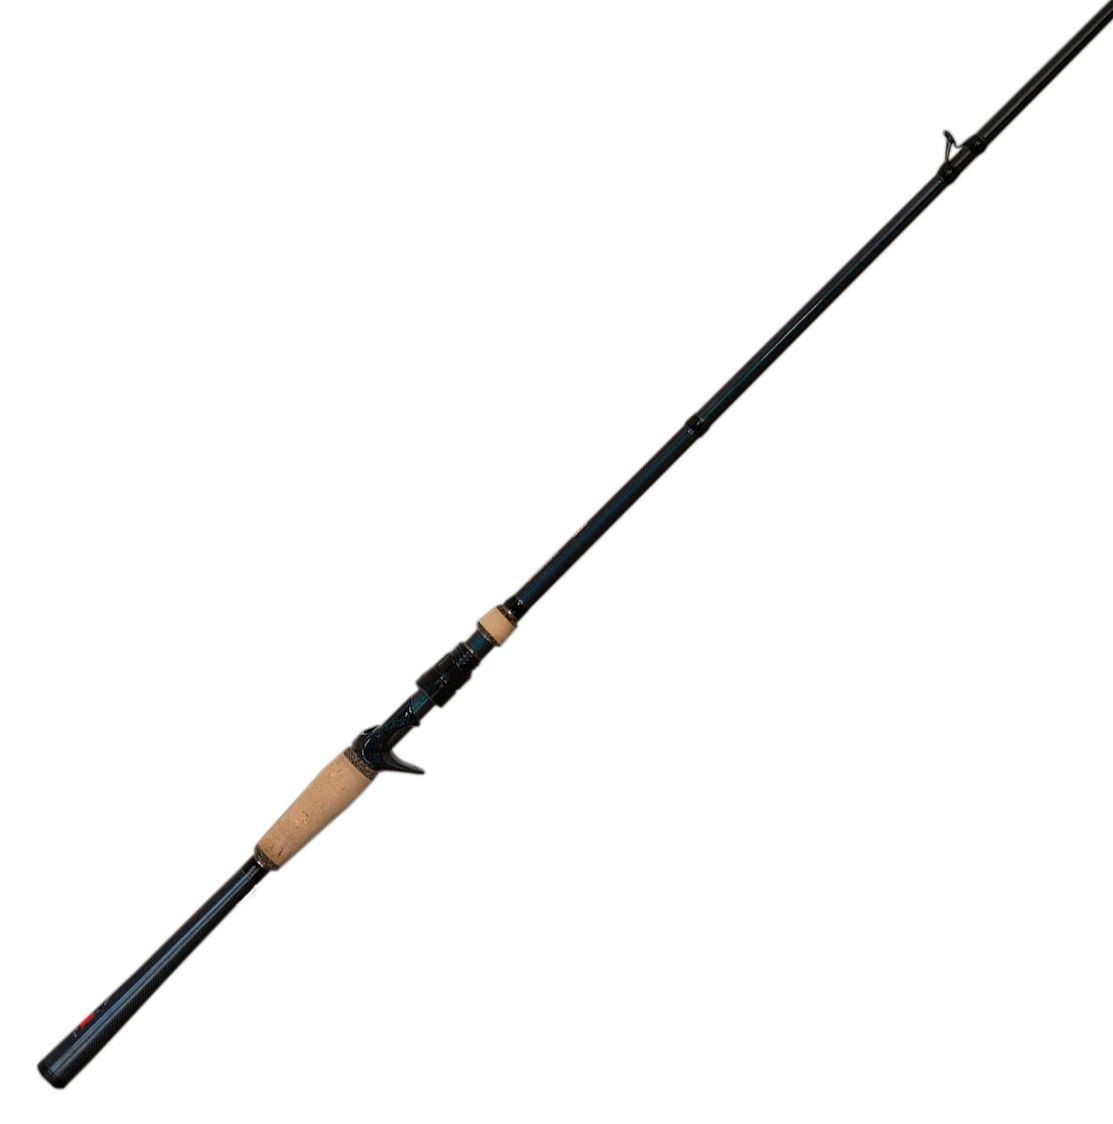 Phenix M1 Casting Rod, 7'8" Heavy